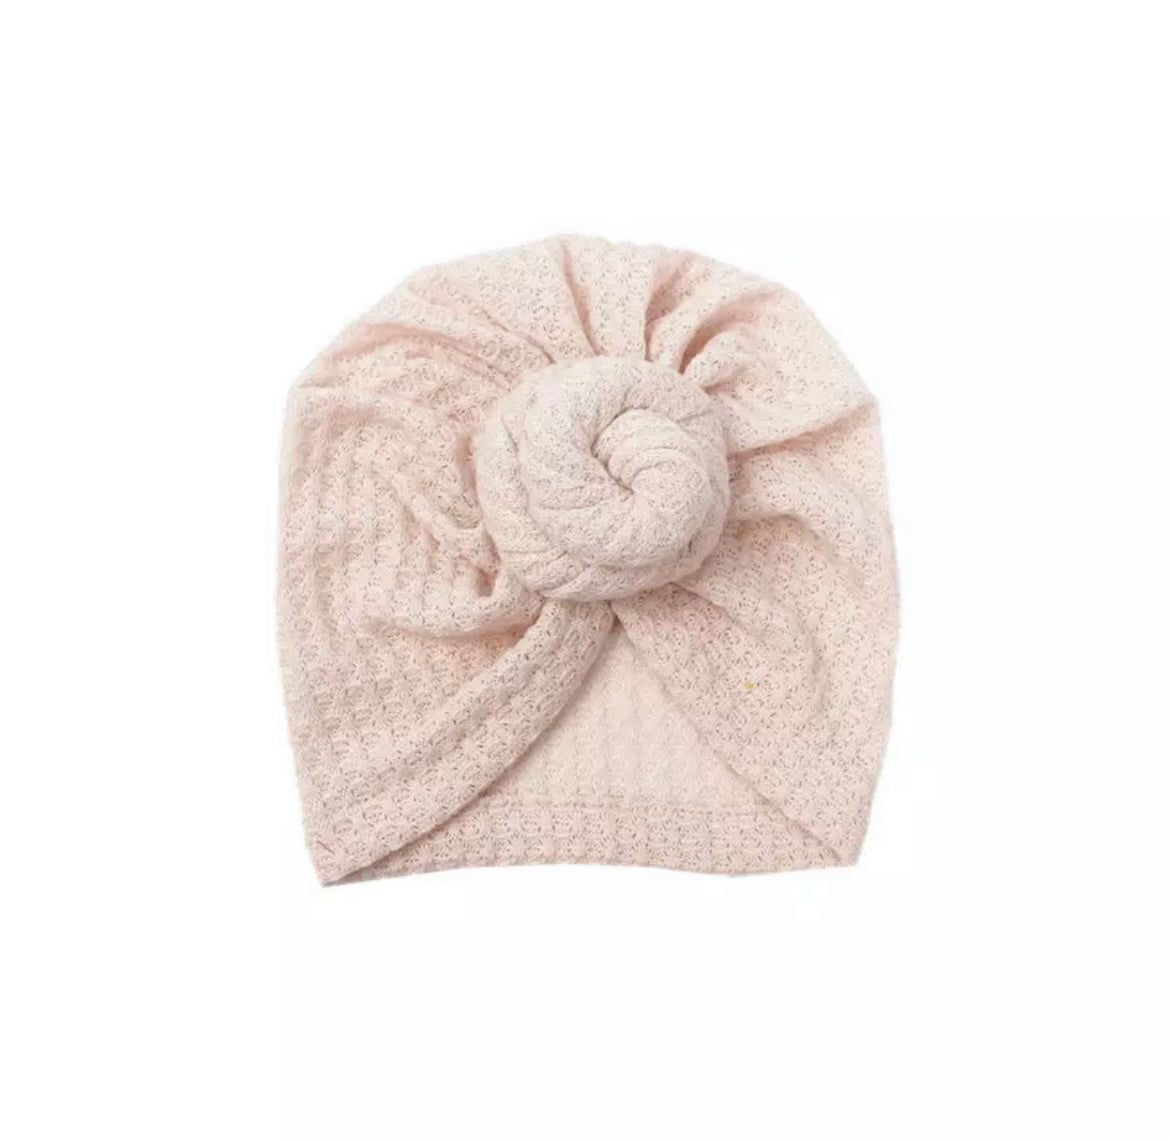 Cream Baby Turbant Cotton Hat One Size